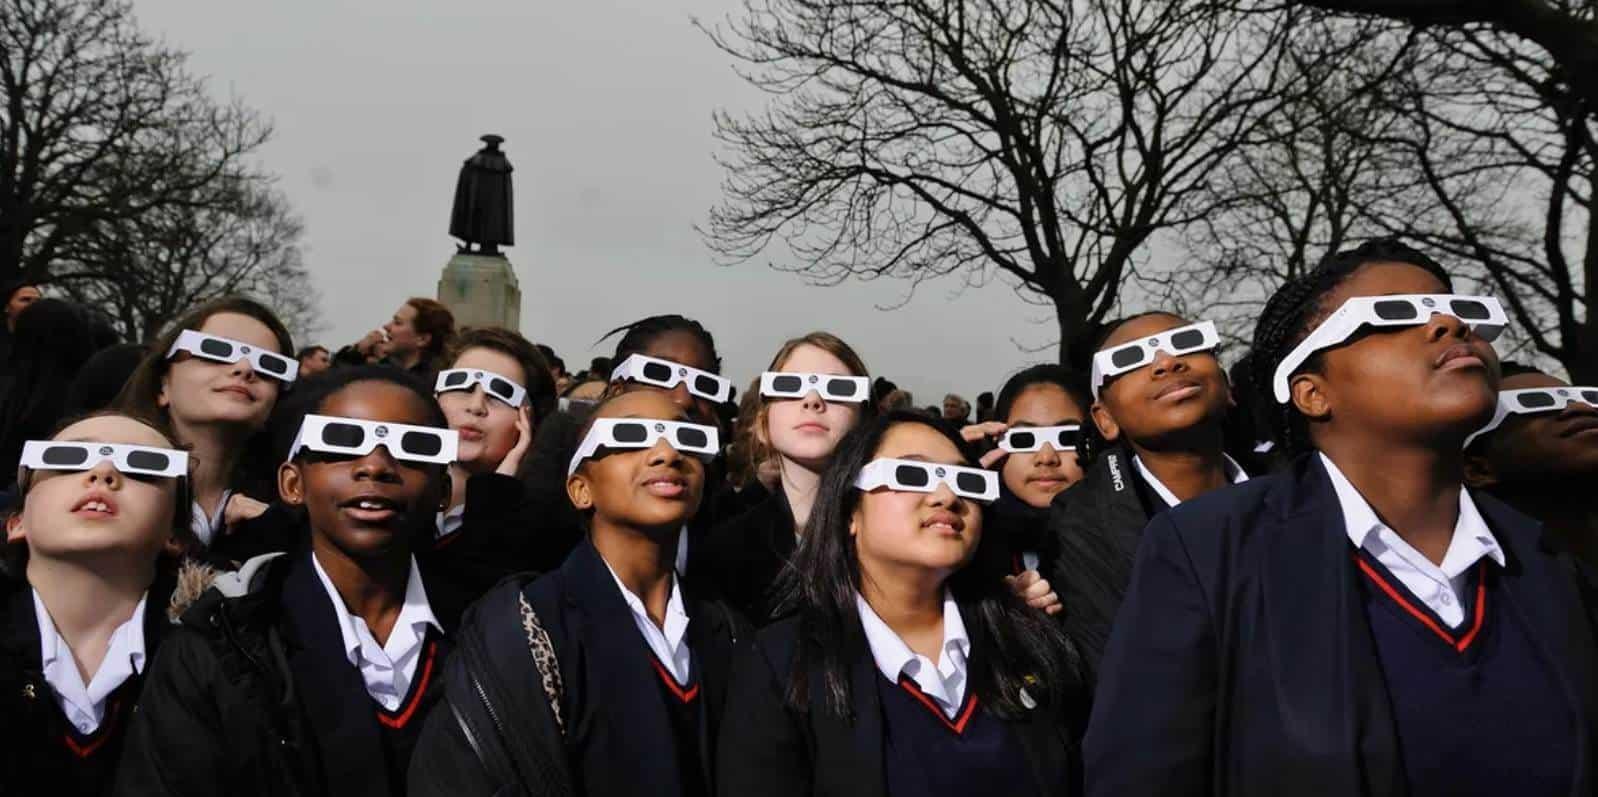 Niños observan eclipse solar parcial en Londres 2015. Foto Joseph Okpako | Getty Images